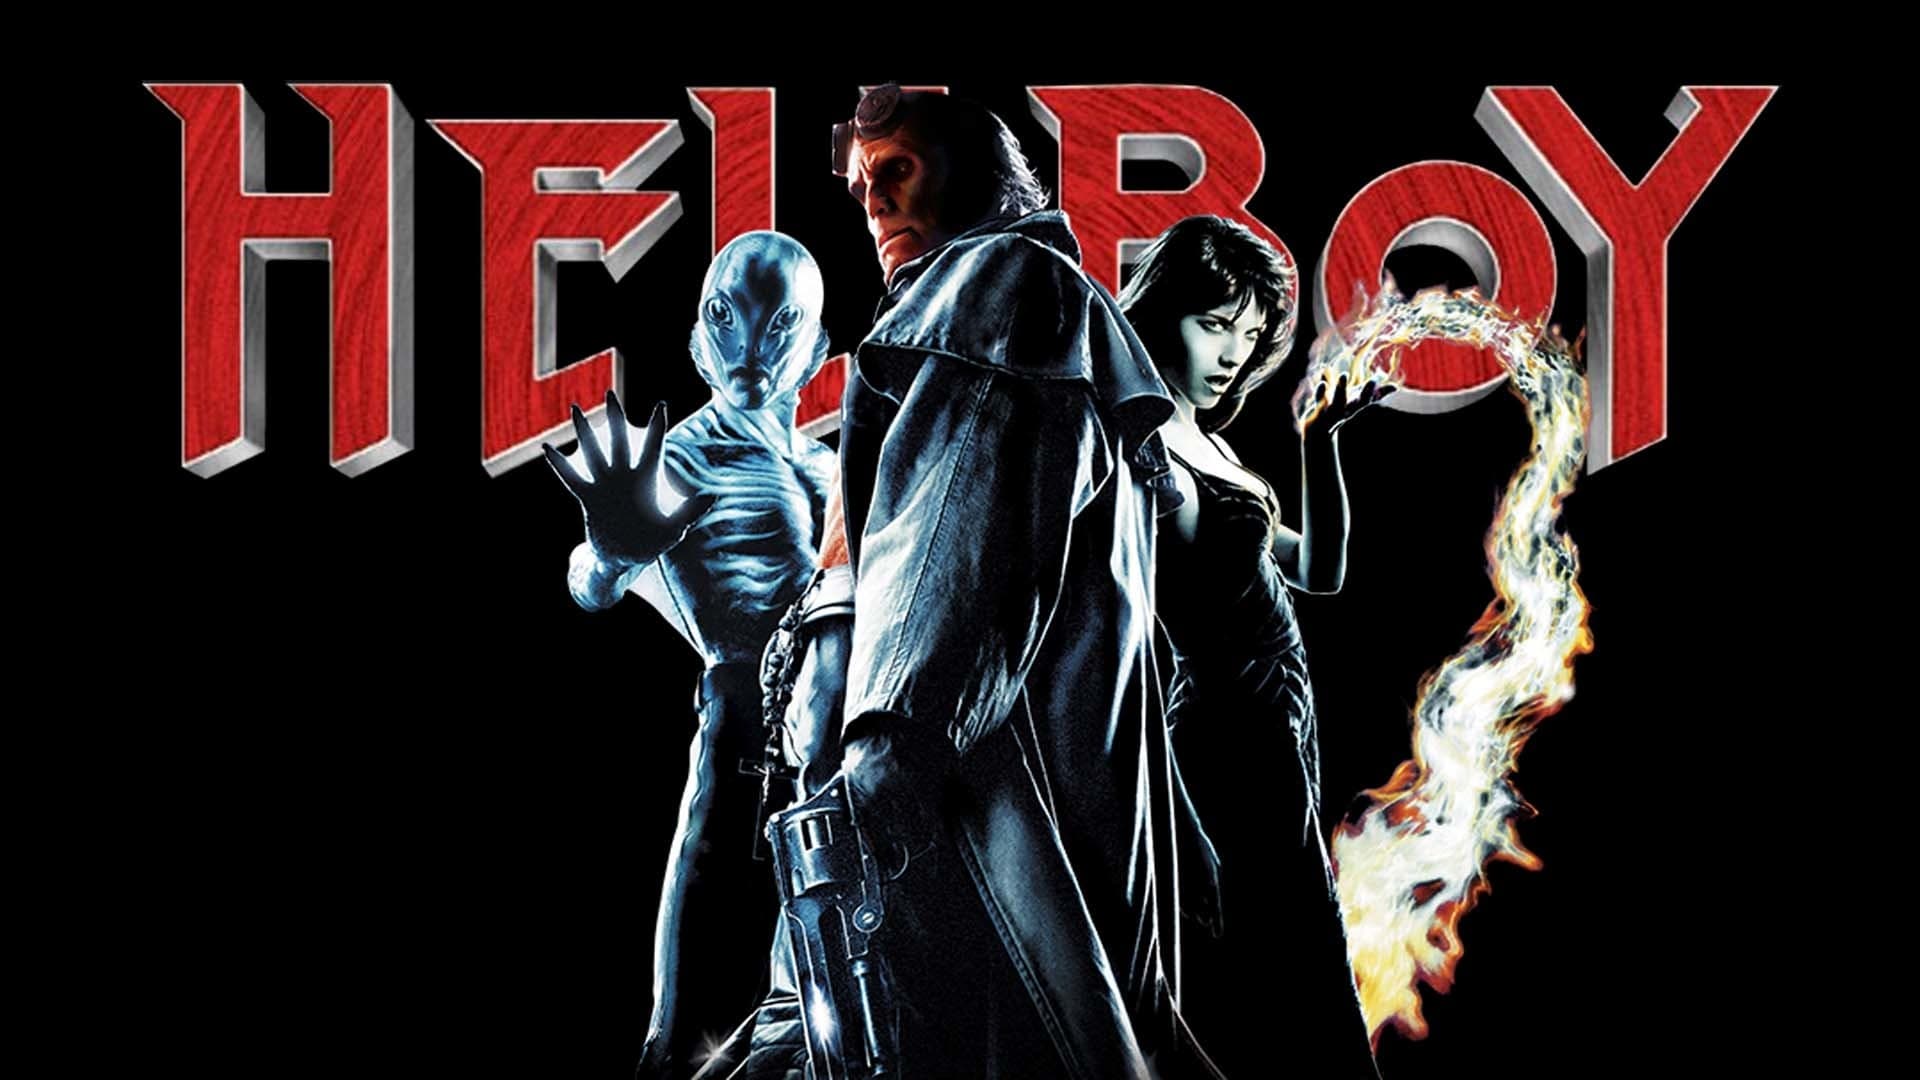 Hellboy (2004) 123 Movies Online1920 x 1080